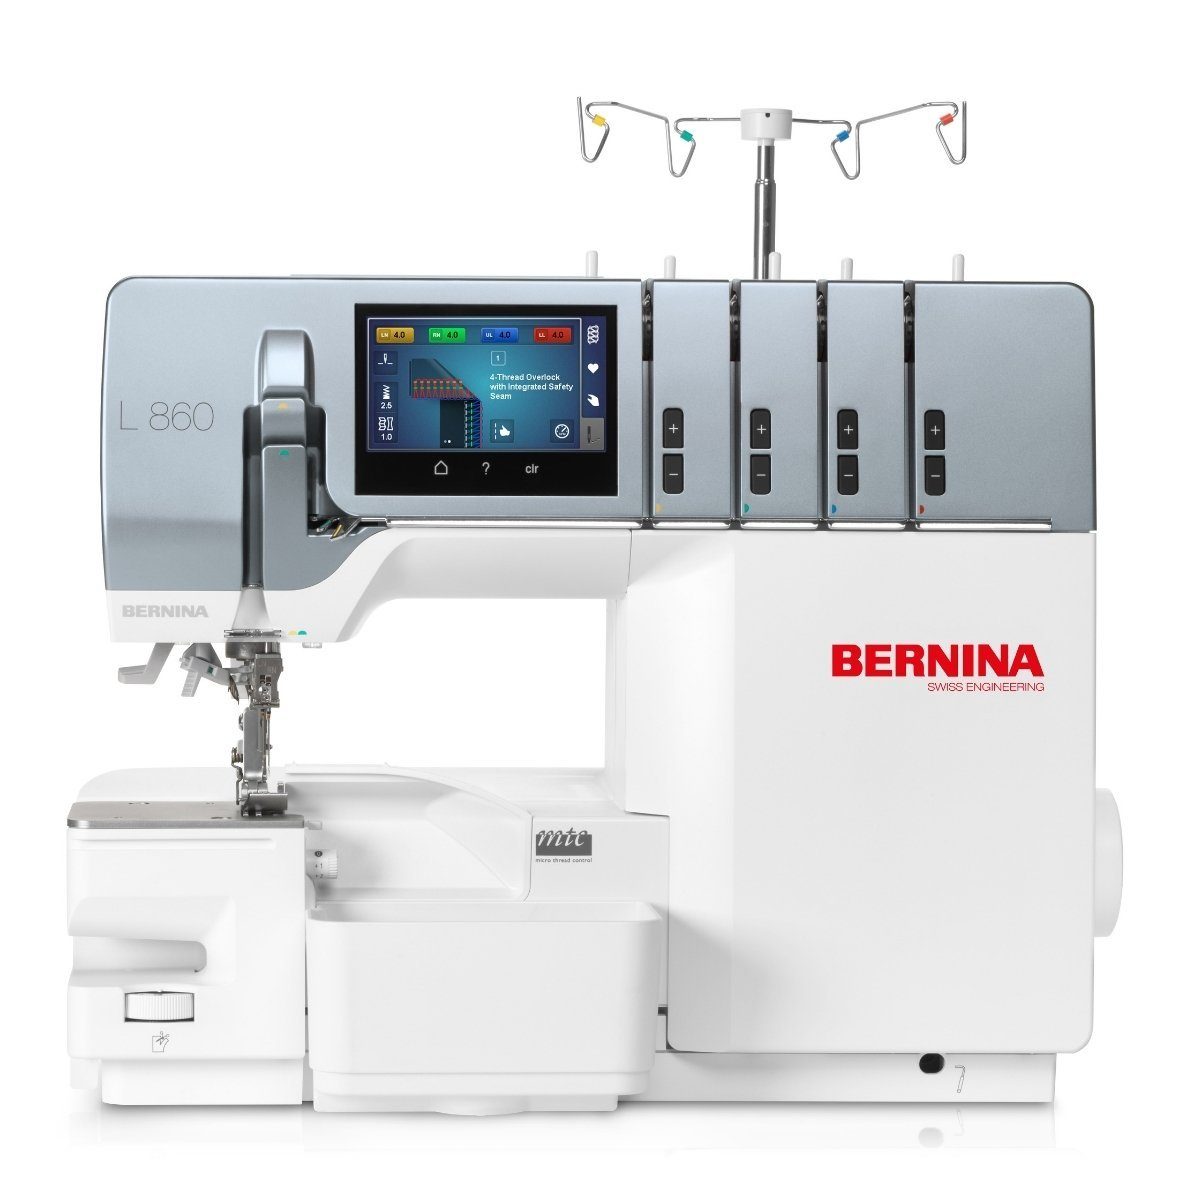 Bernina Overlock-Nähmaschine Bernina L860